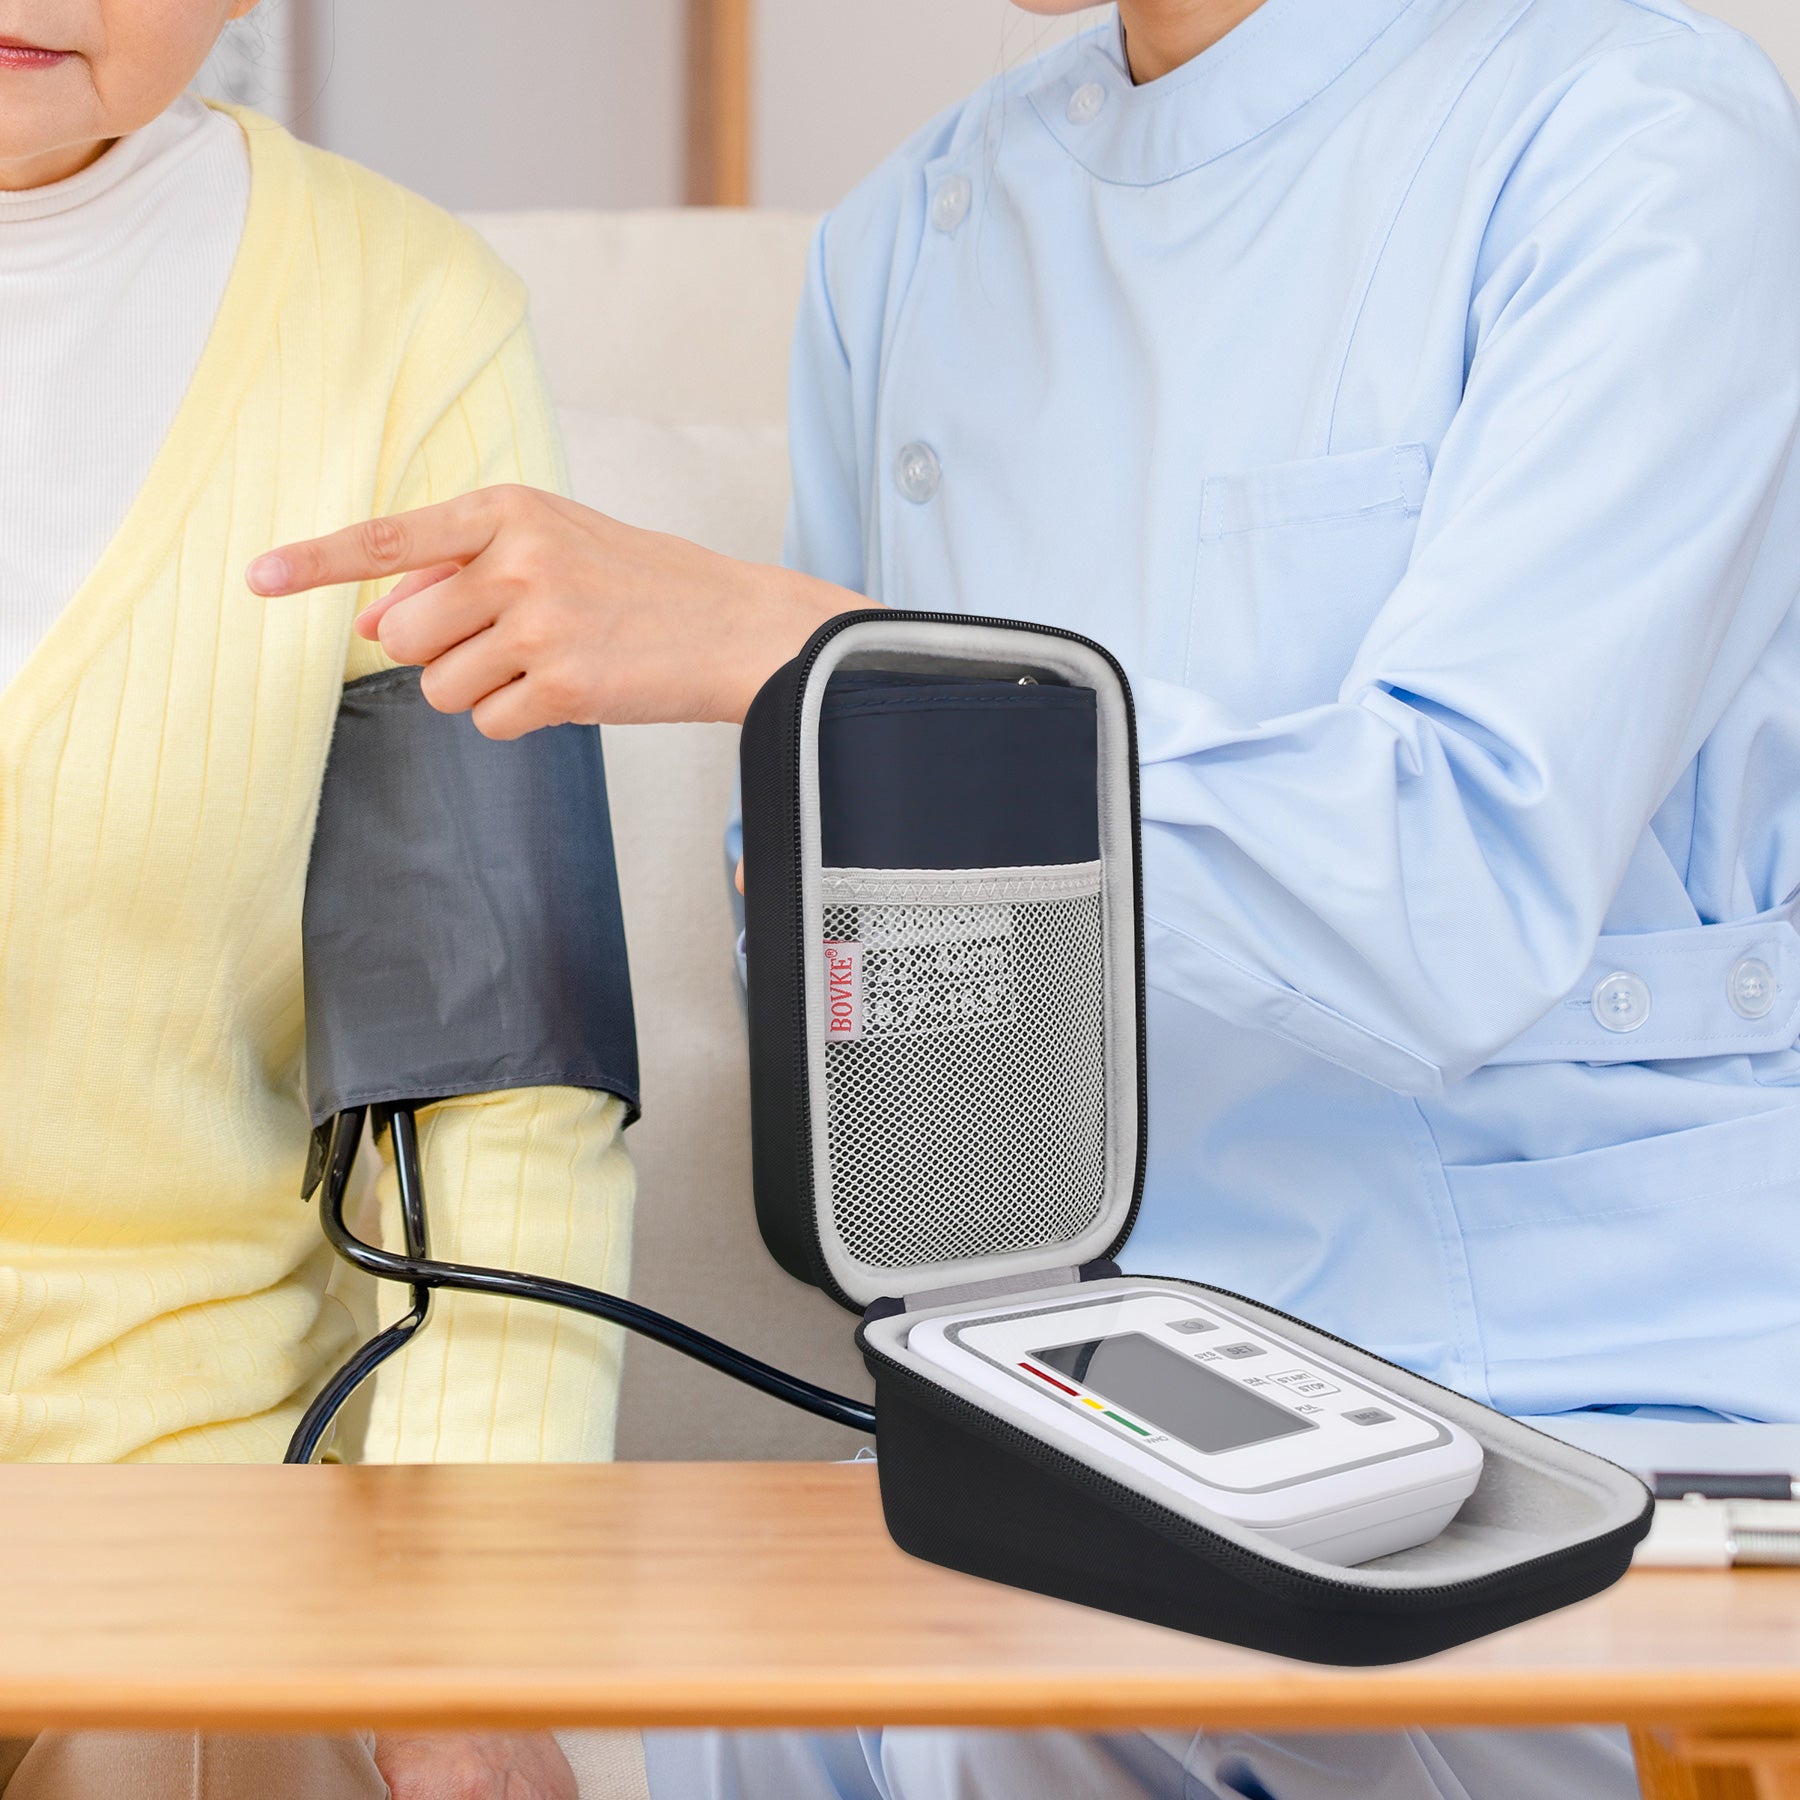 BOVKE Case for Omron 10 Series BP5450 Blood Pressure Monitor